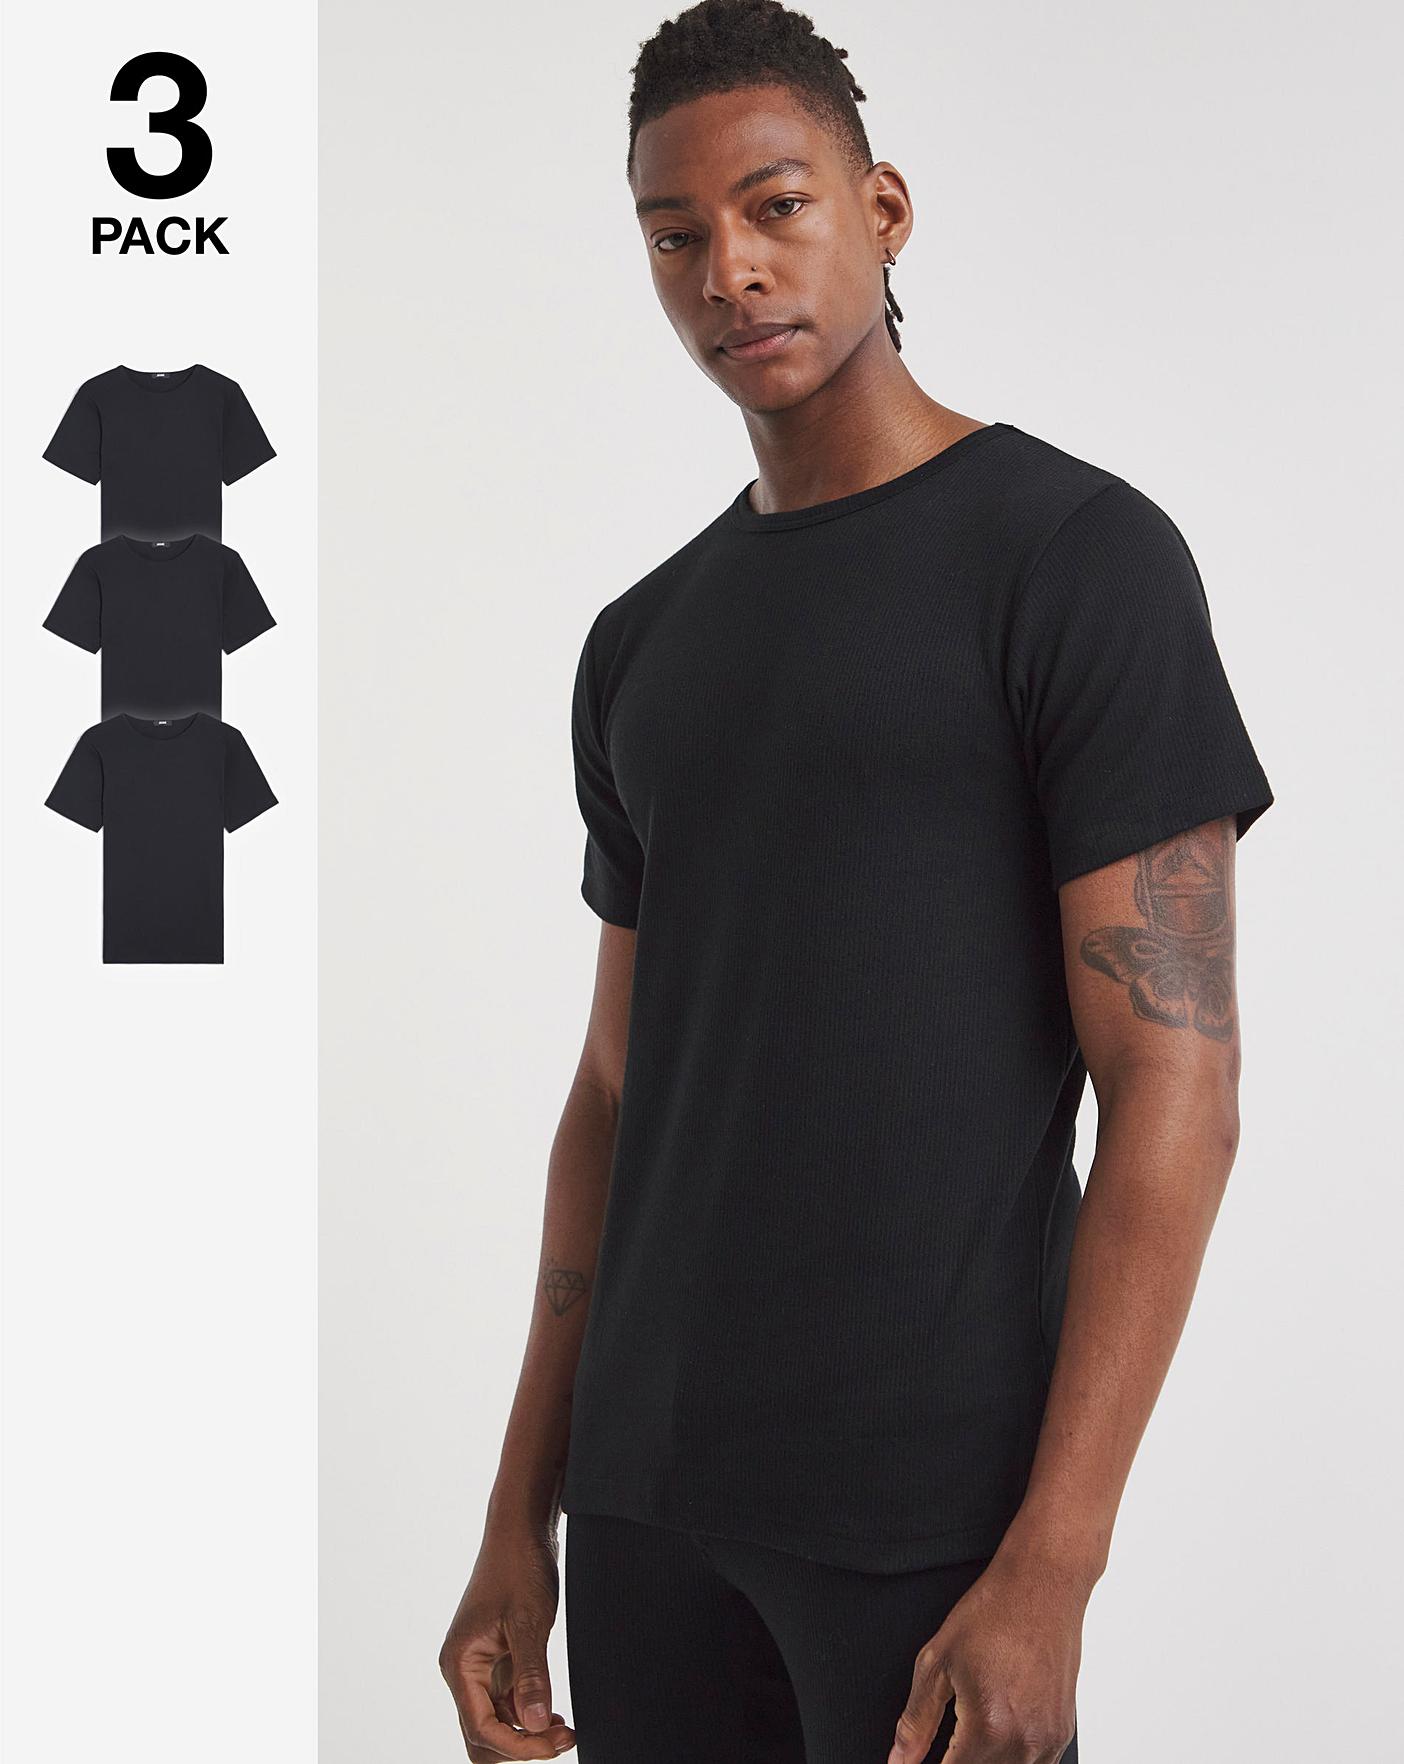 3 Pk Black Thermal S/S T-Shirt